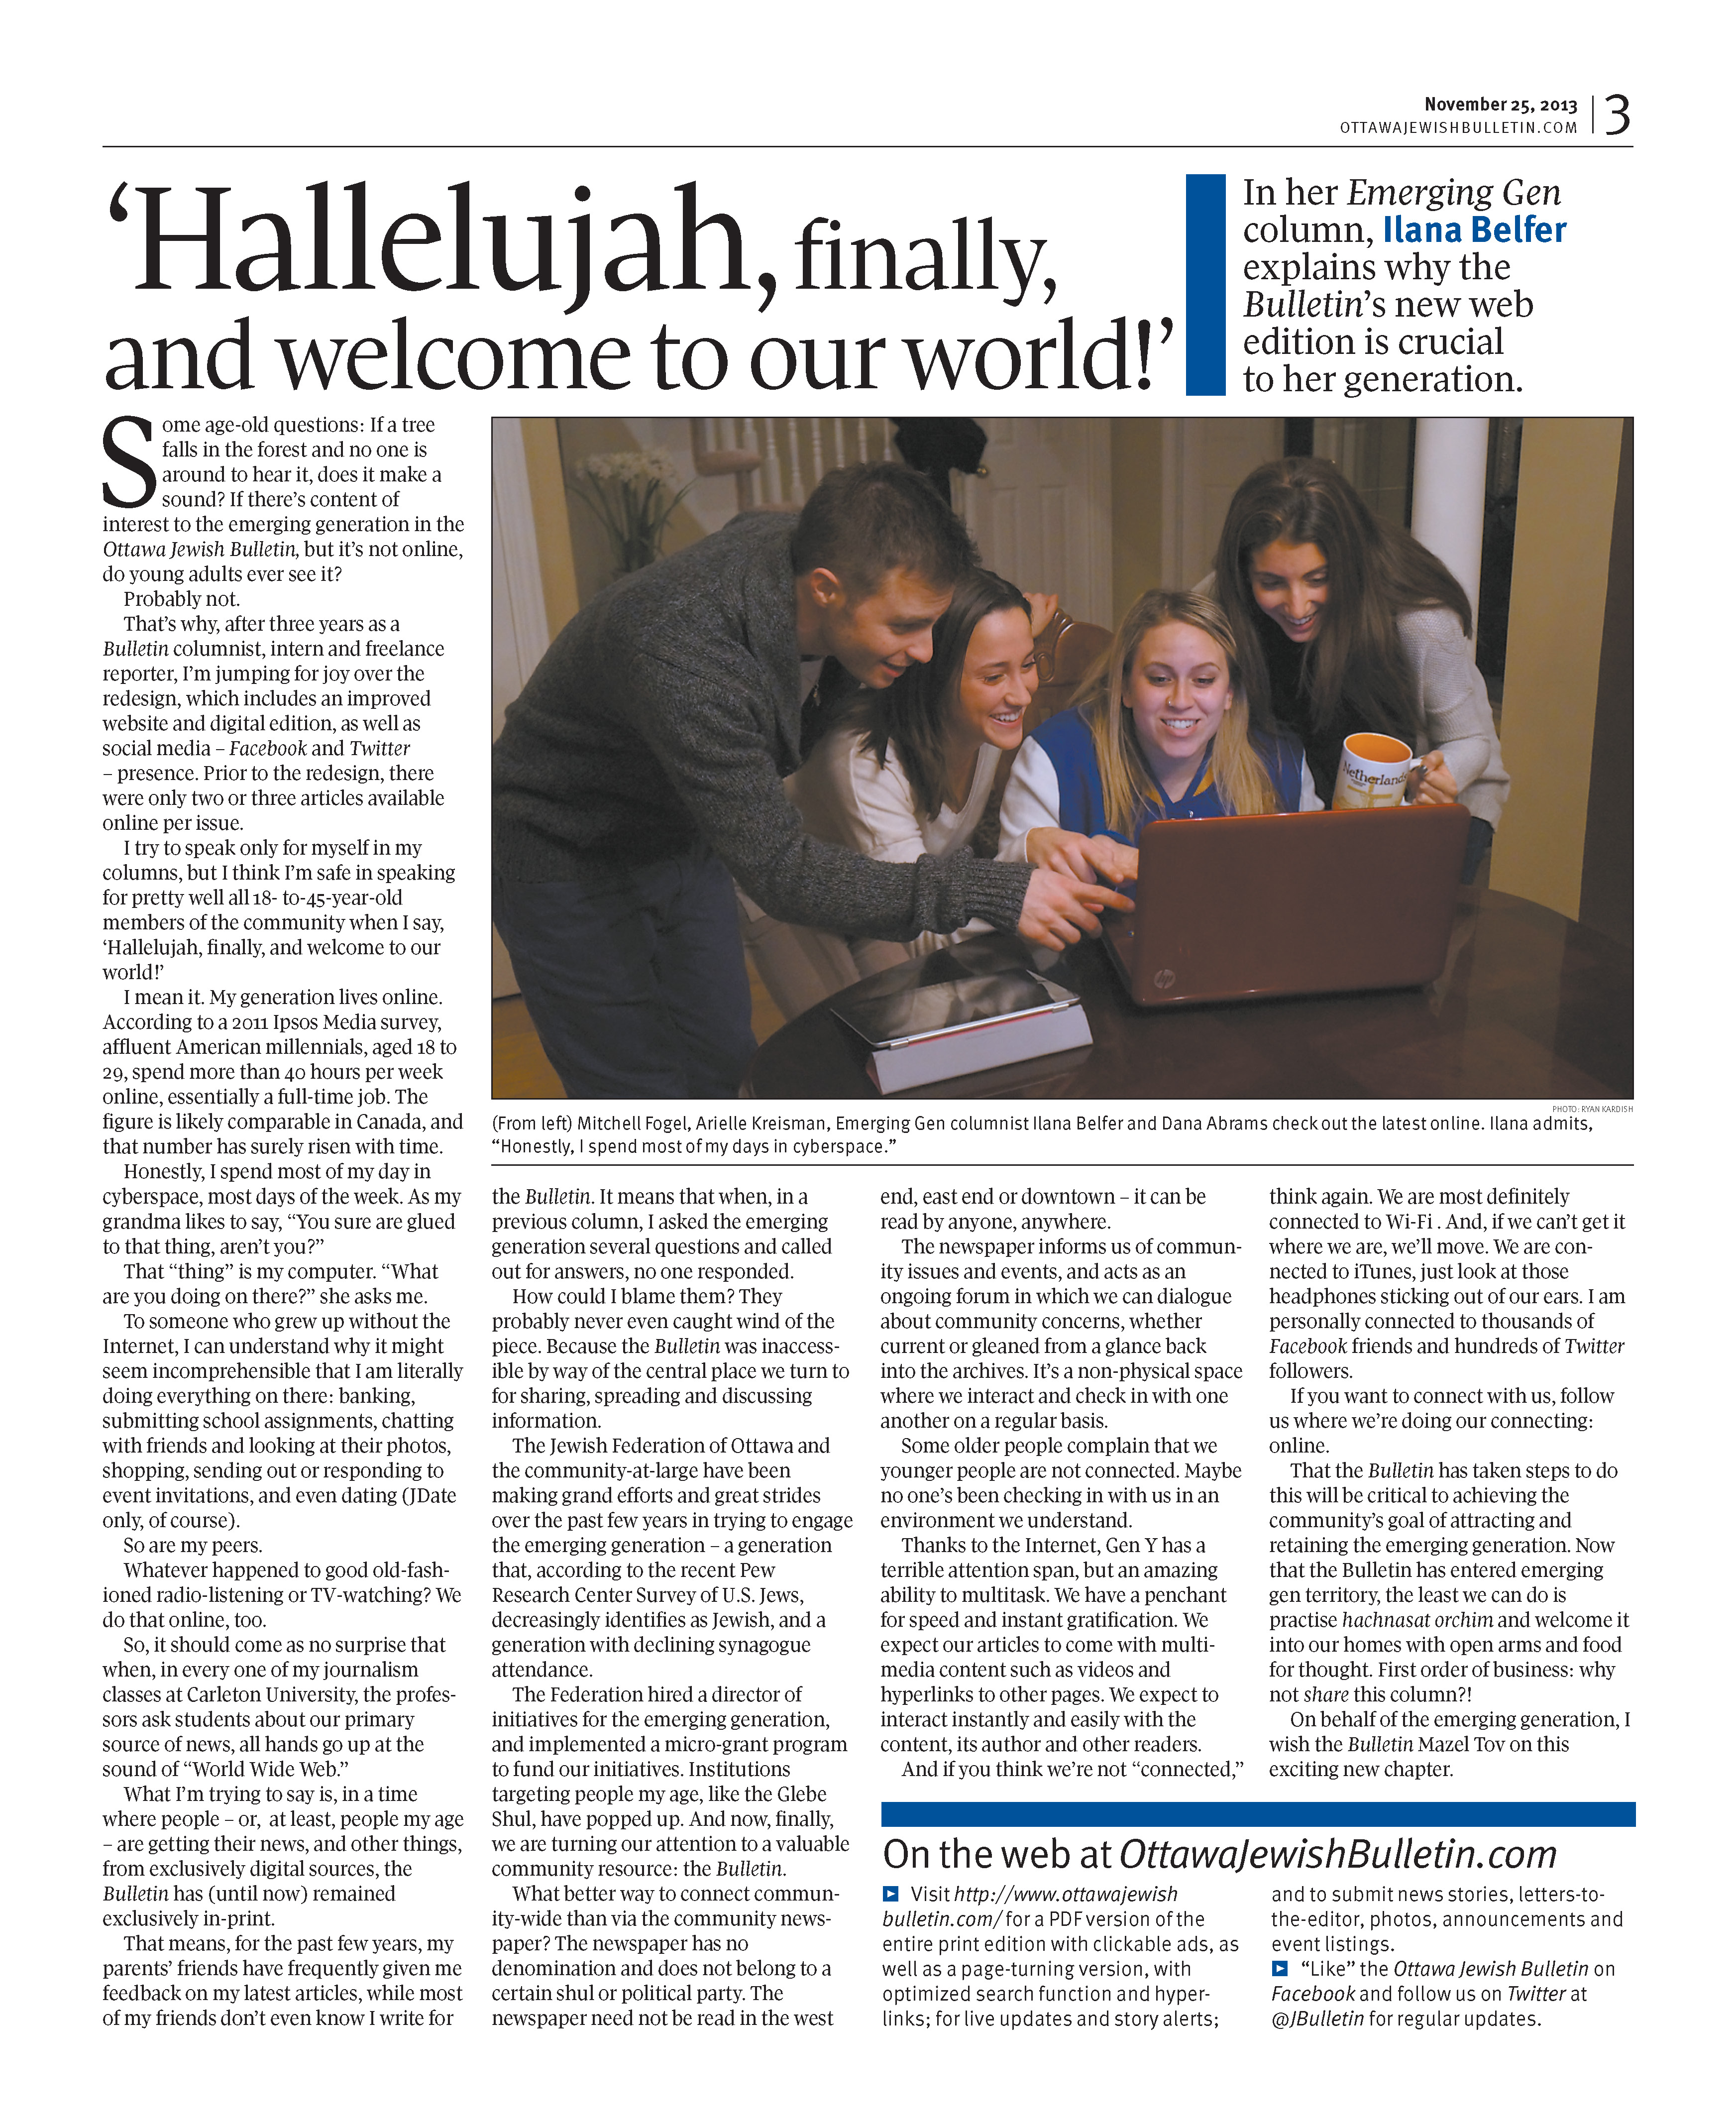 Image of a printed Ottawa Jewish Bulletin showing an inside page